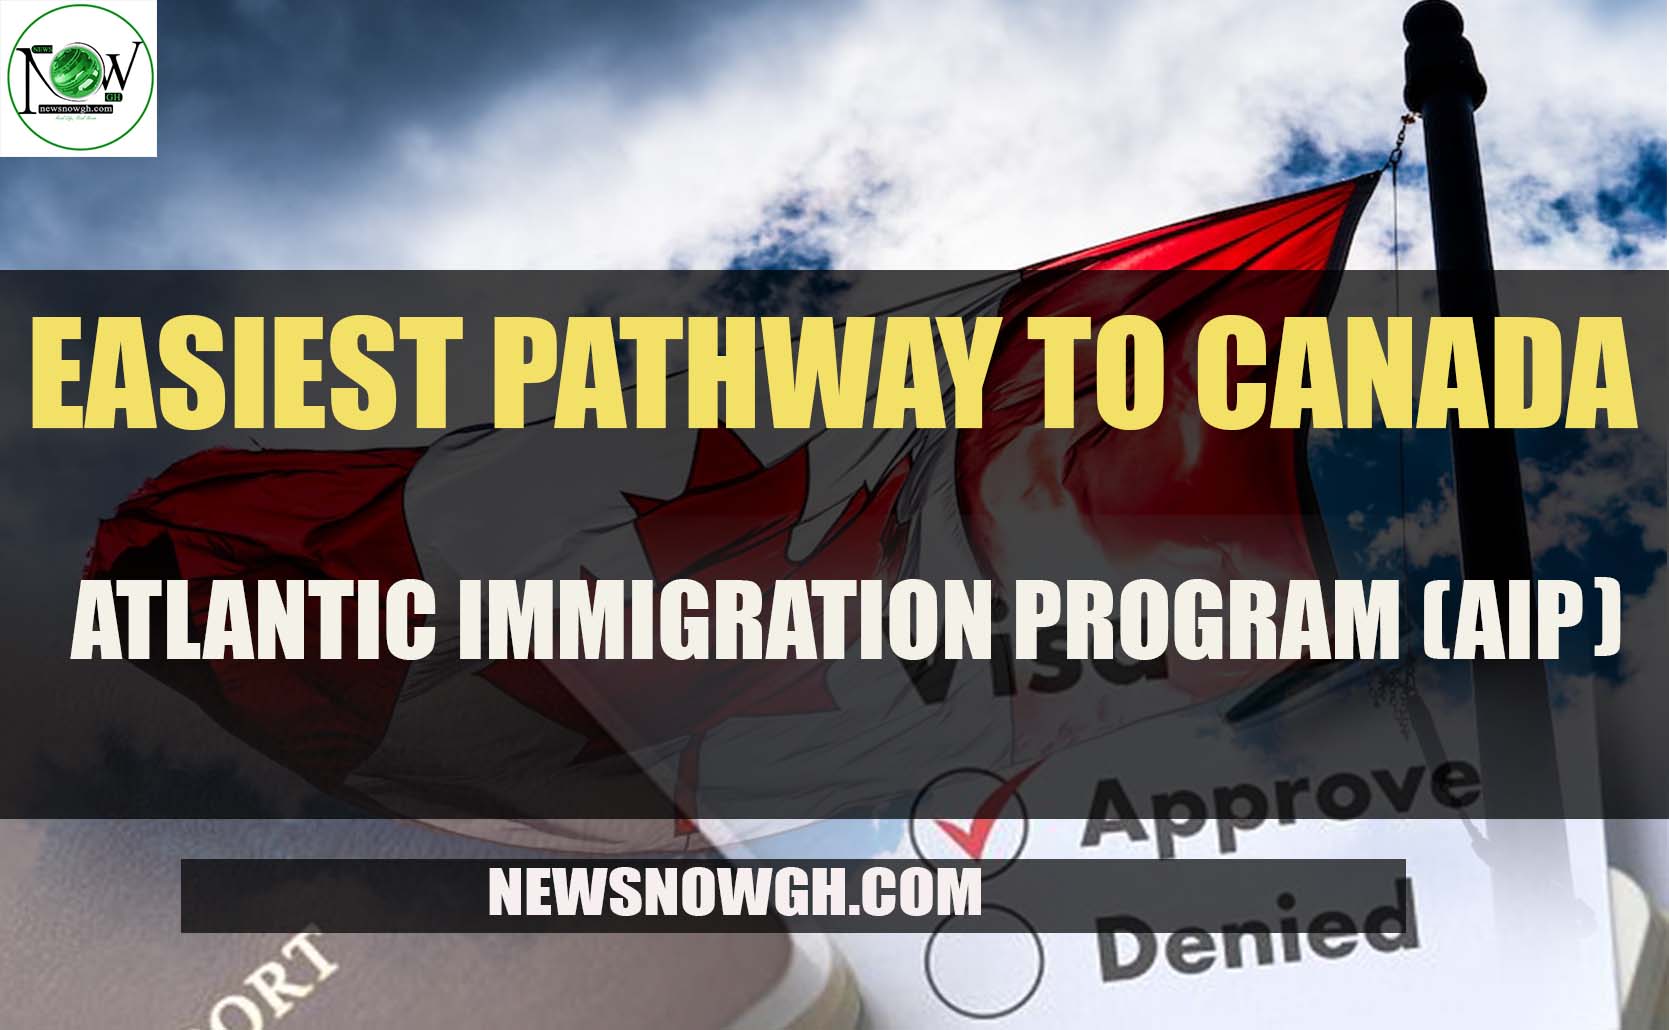 Atlantic Immigration Program (AIP) Easiest Pathway to Canada